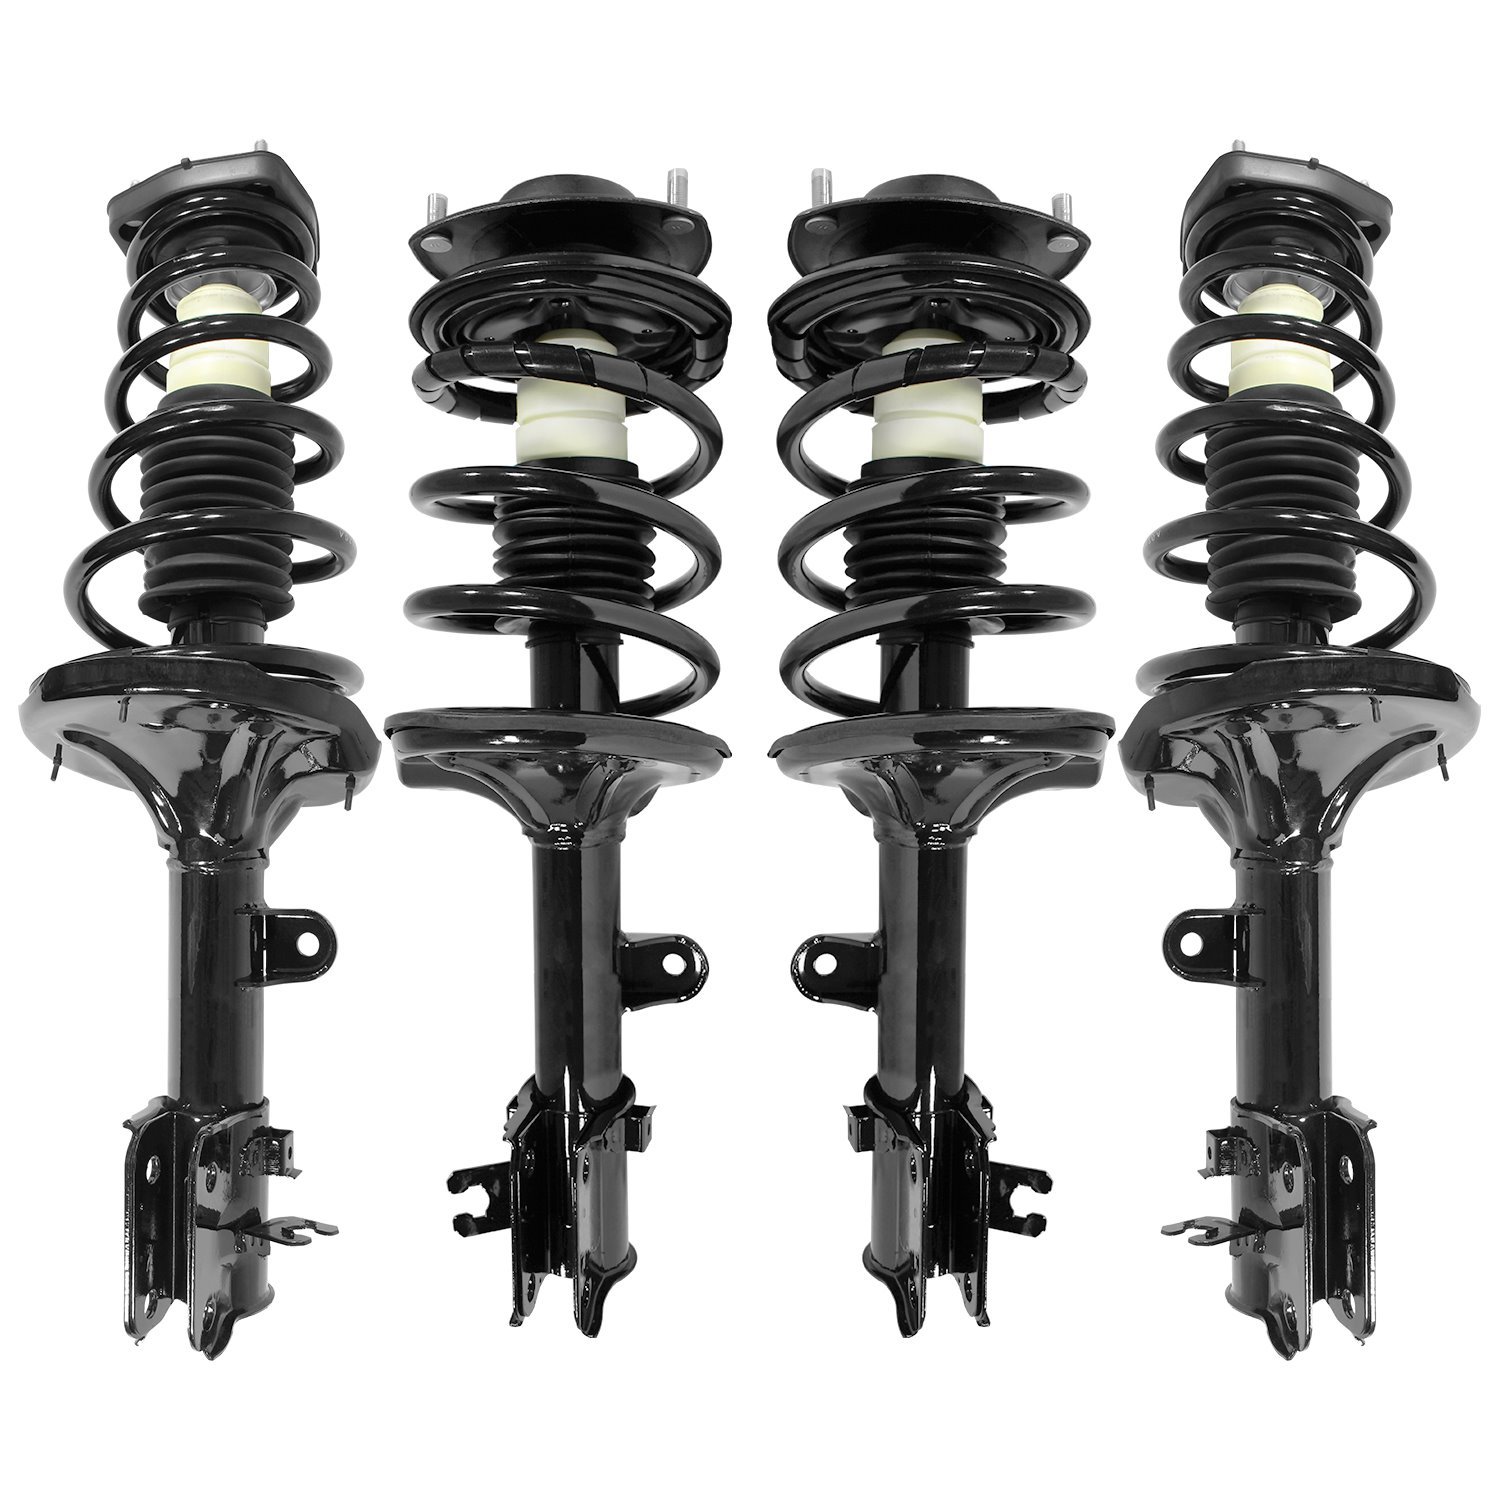 4-11743-15511-001 Front & Rear Suspension Strut & Coil Spring Assembly Kit Fits Select Kia Sportage, Hyundai Tucson